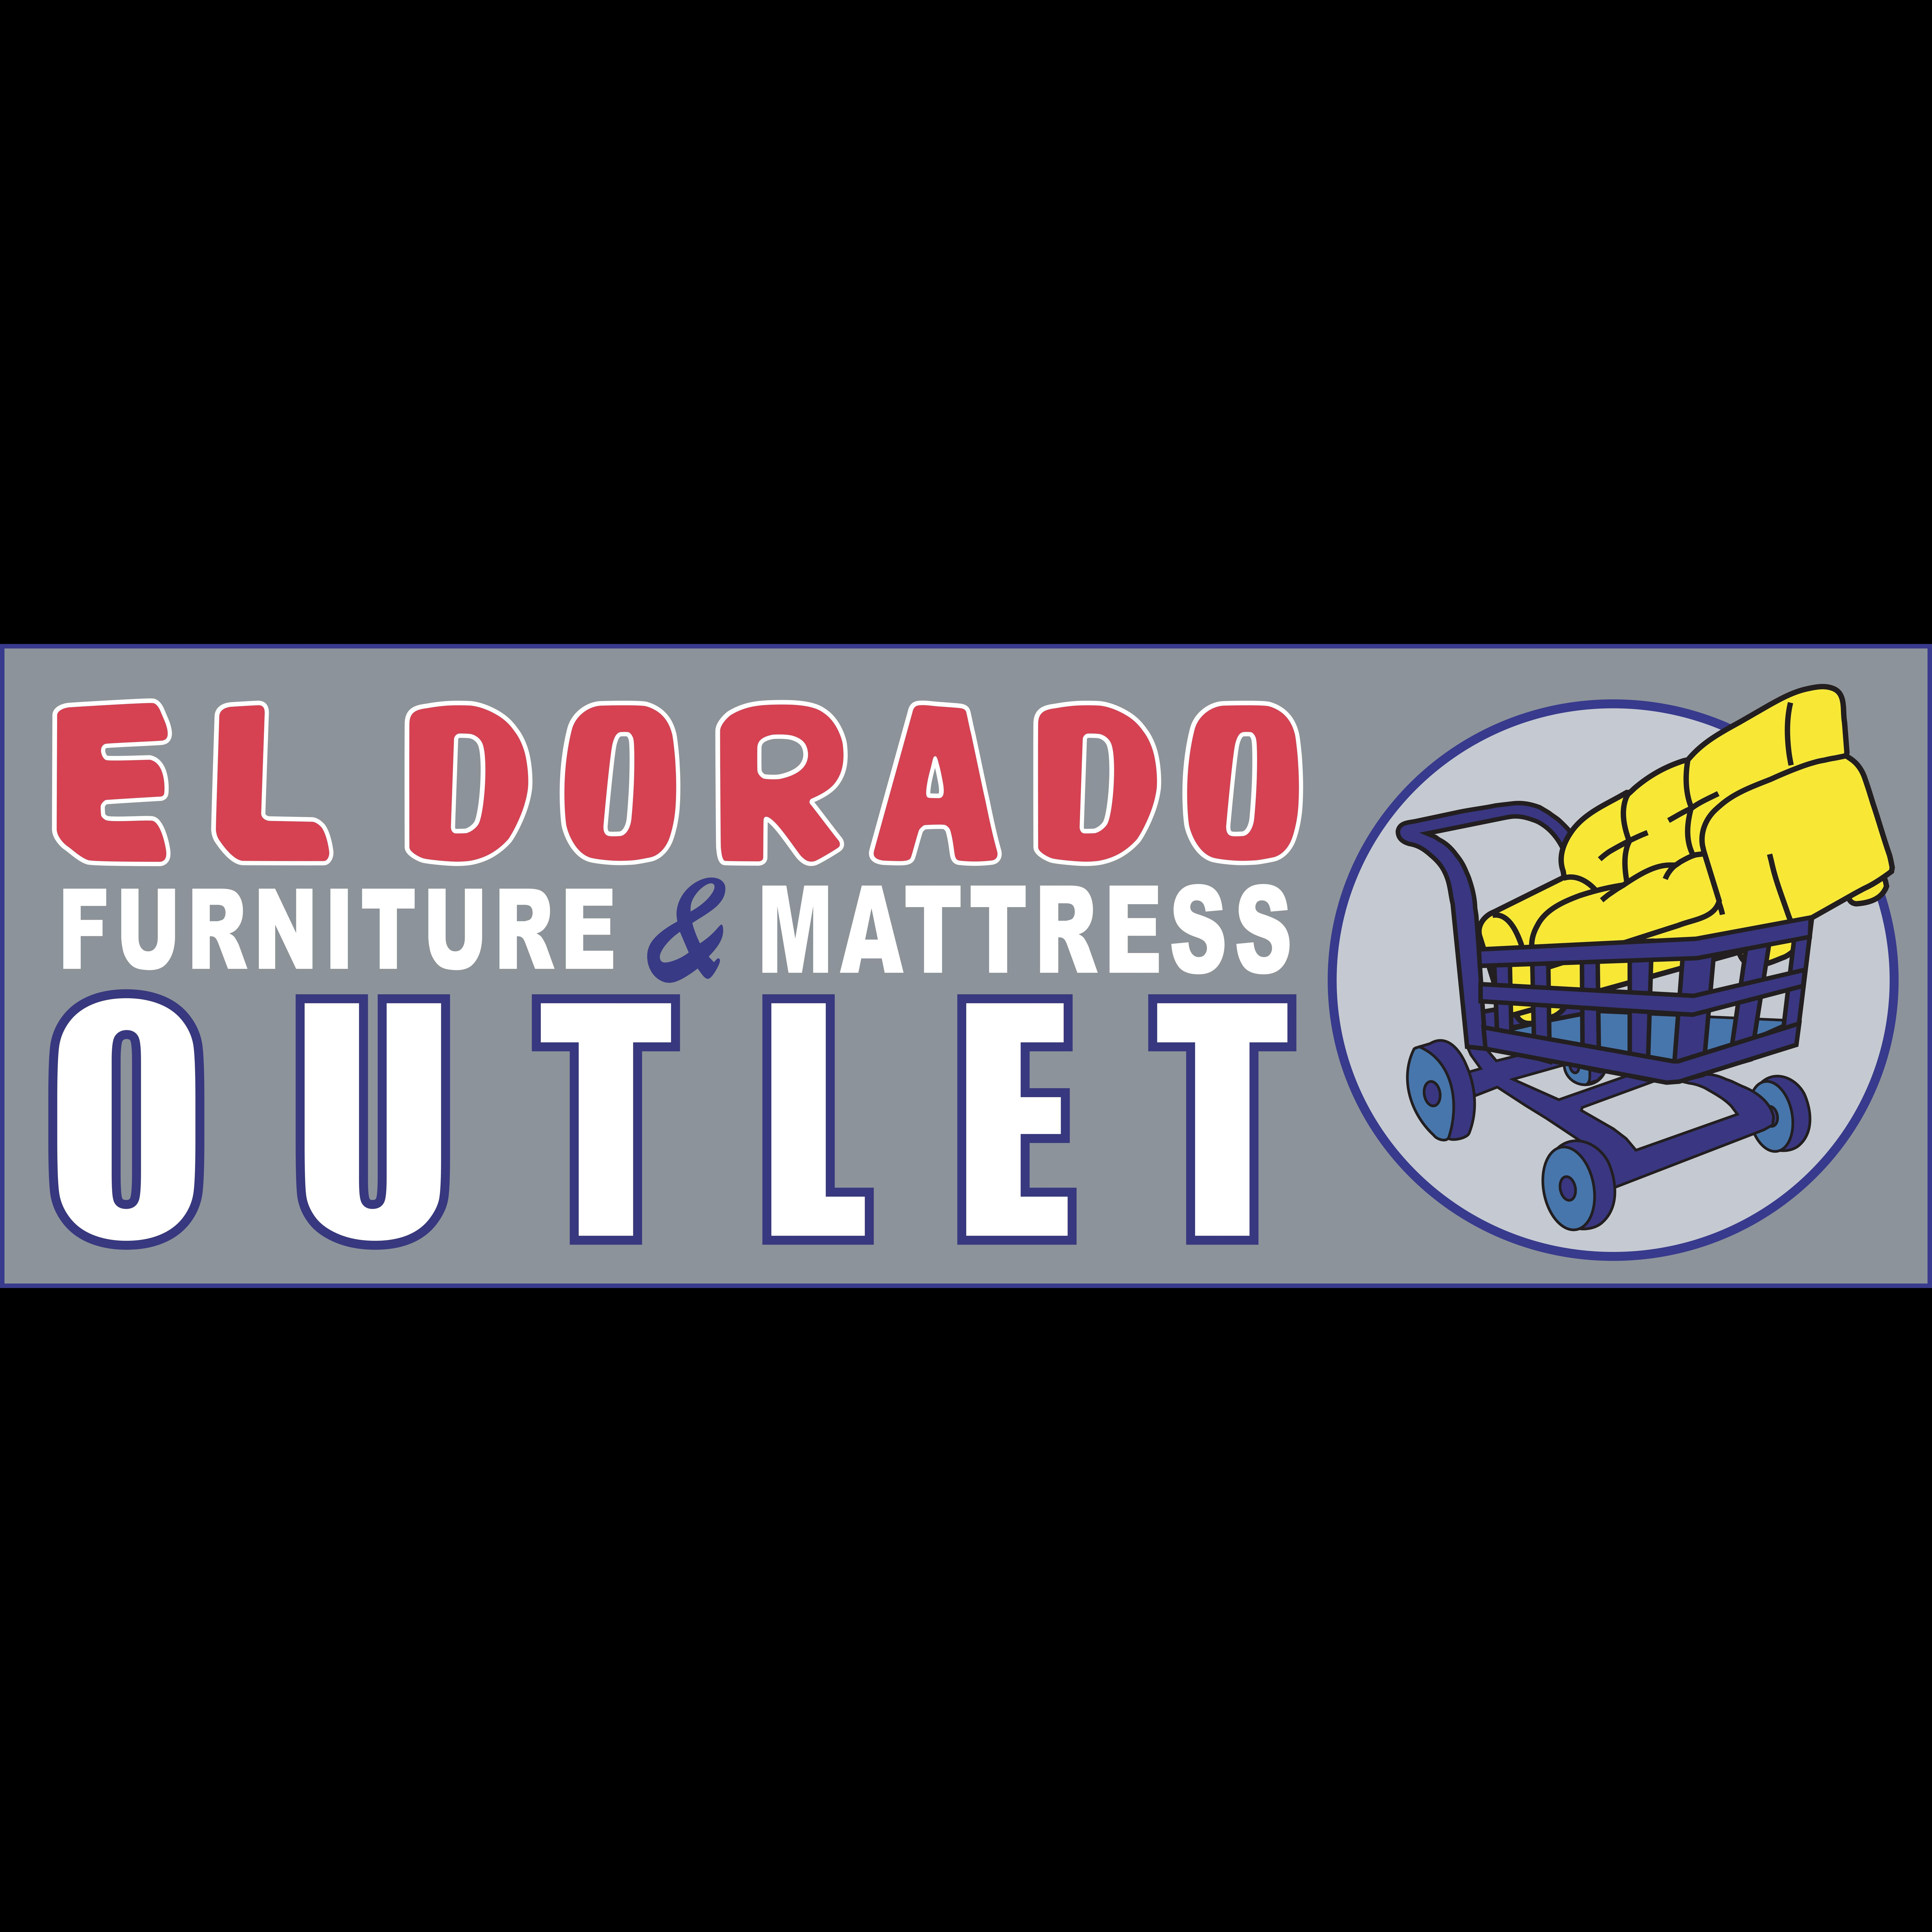 El Dorado Furniture - Furniture & Mattress Outlet - Airport Store Miami (305)477-1909